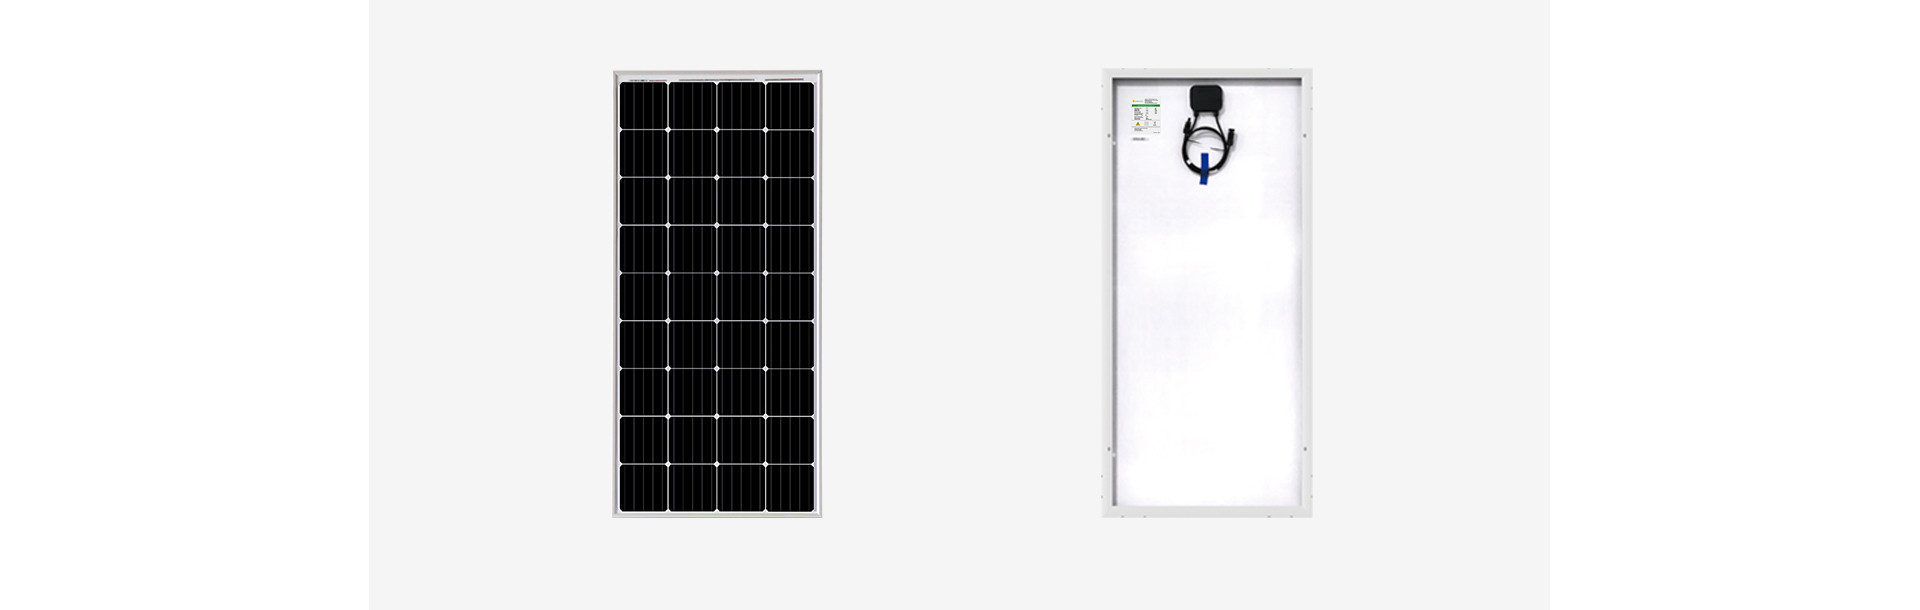 solar panel 100w, solar module real shot, solar panel picture